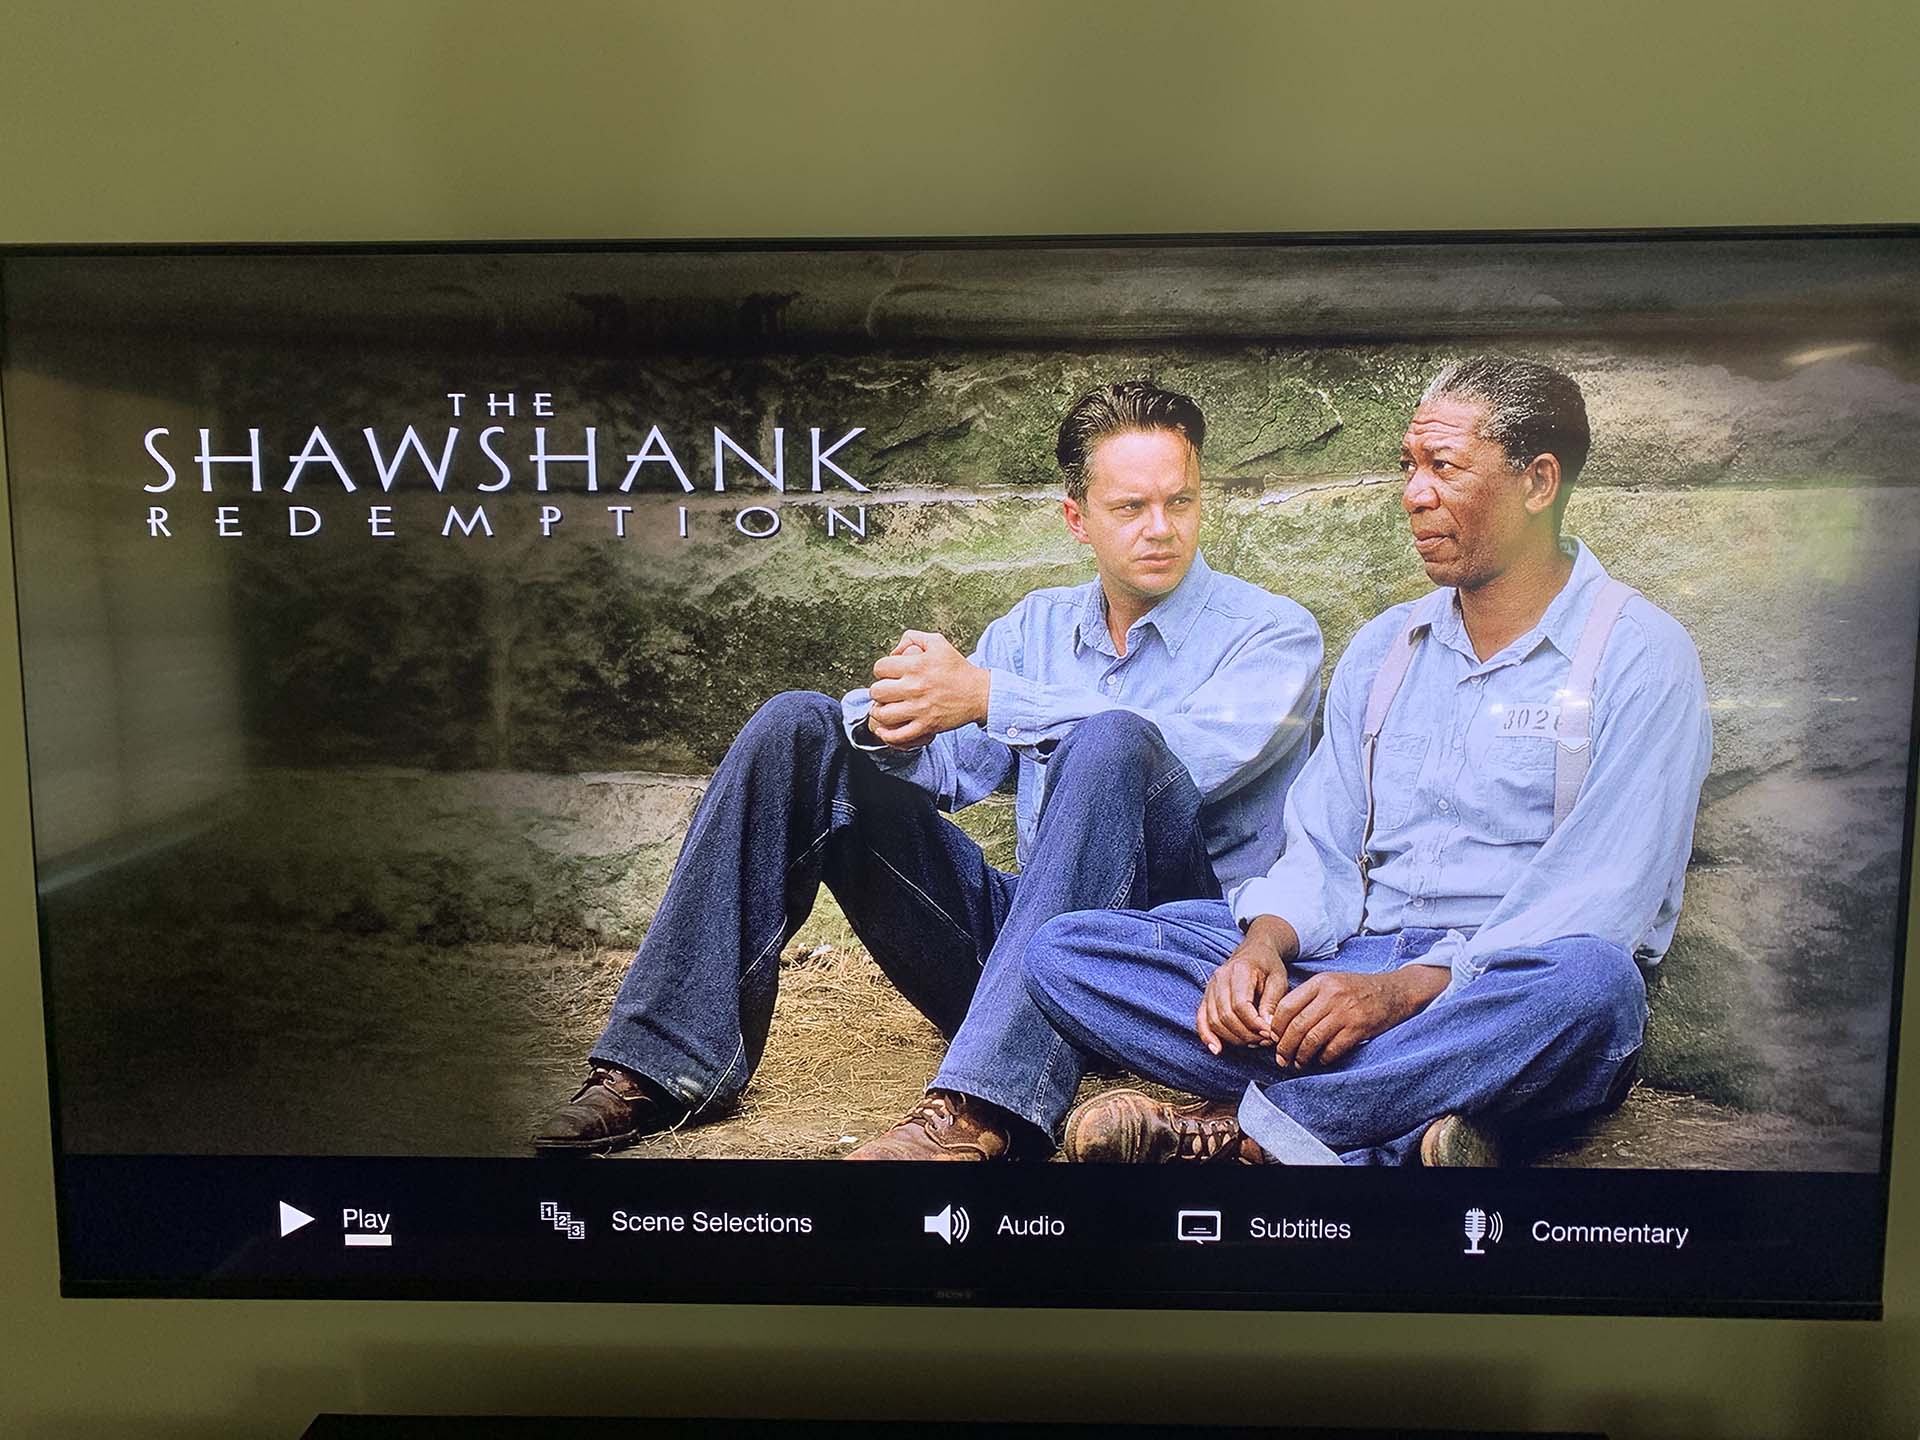 The Shawshank Redemption 4k Blu-ray home 1920px